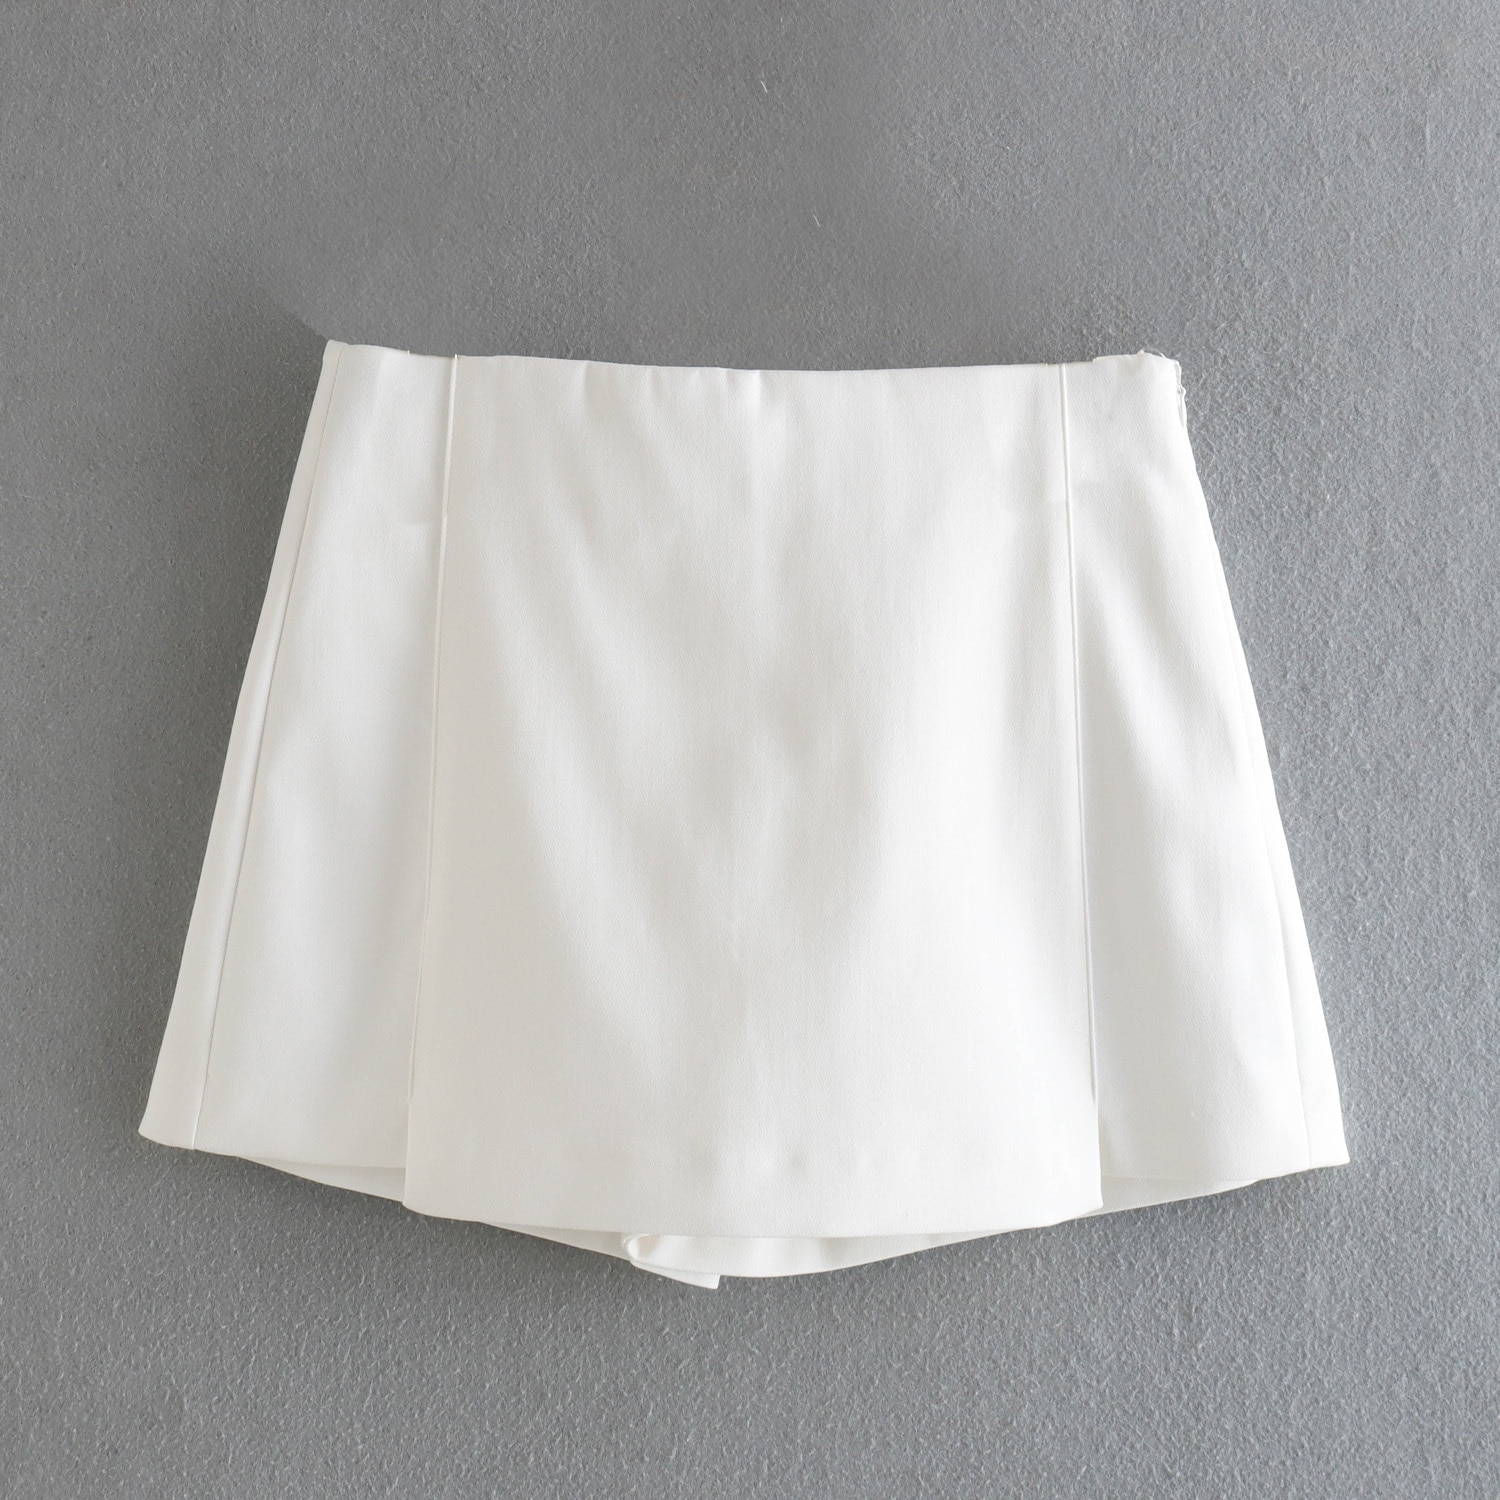 Zevity-Women-Fashion-Solid-Color-Hem-Irregular-Summer-Shorts-Lady-Chic-Side-Zipper-Casual-Shorts-Skirts-3